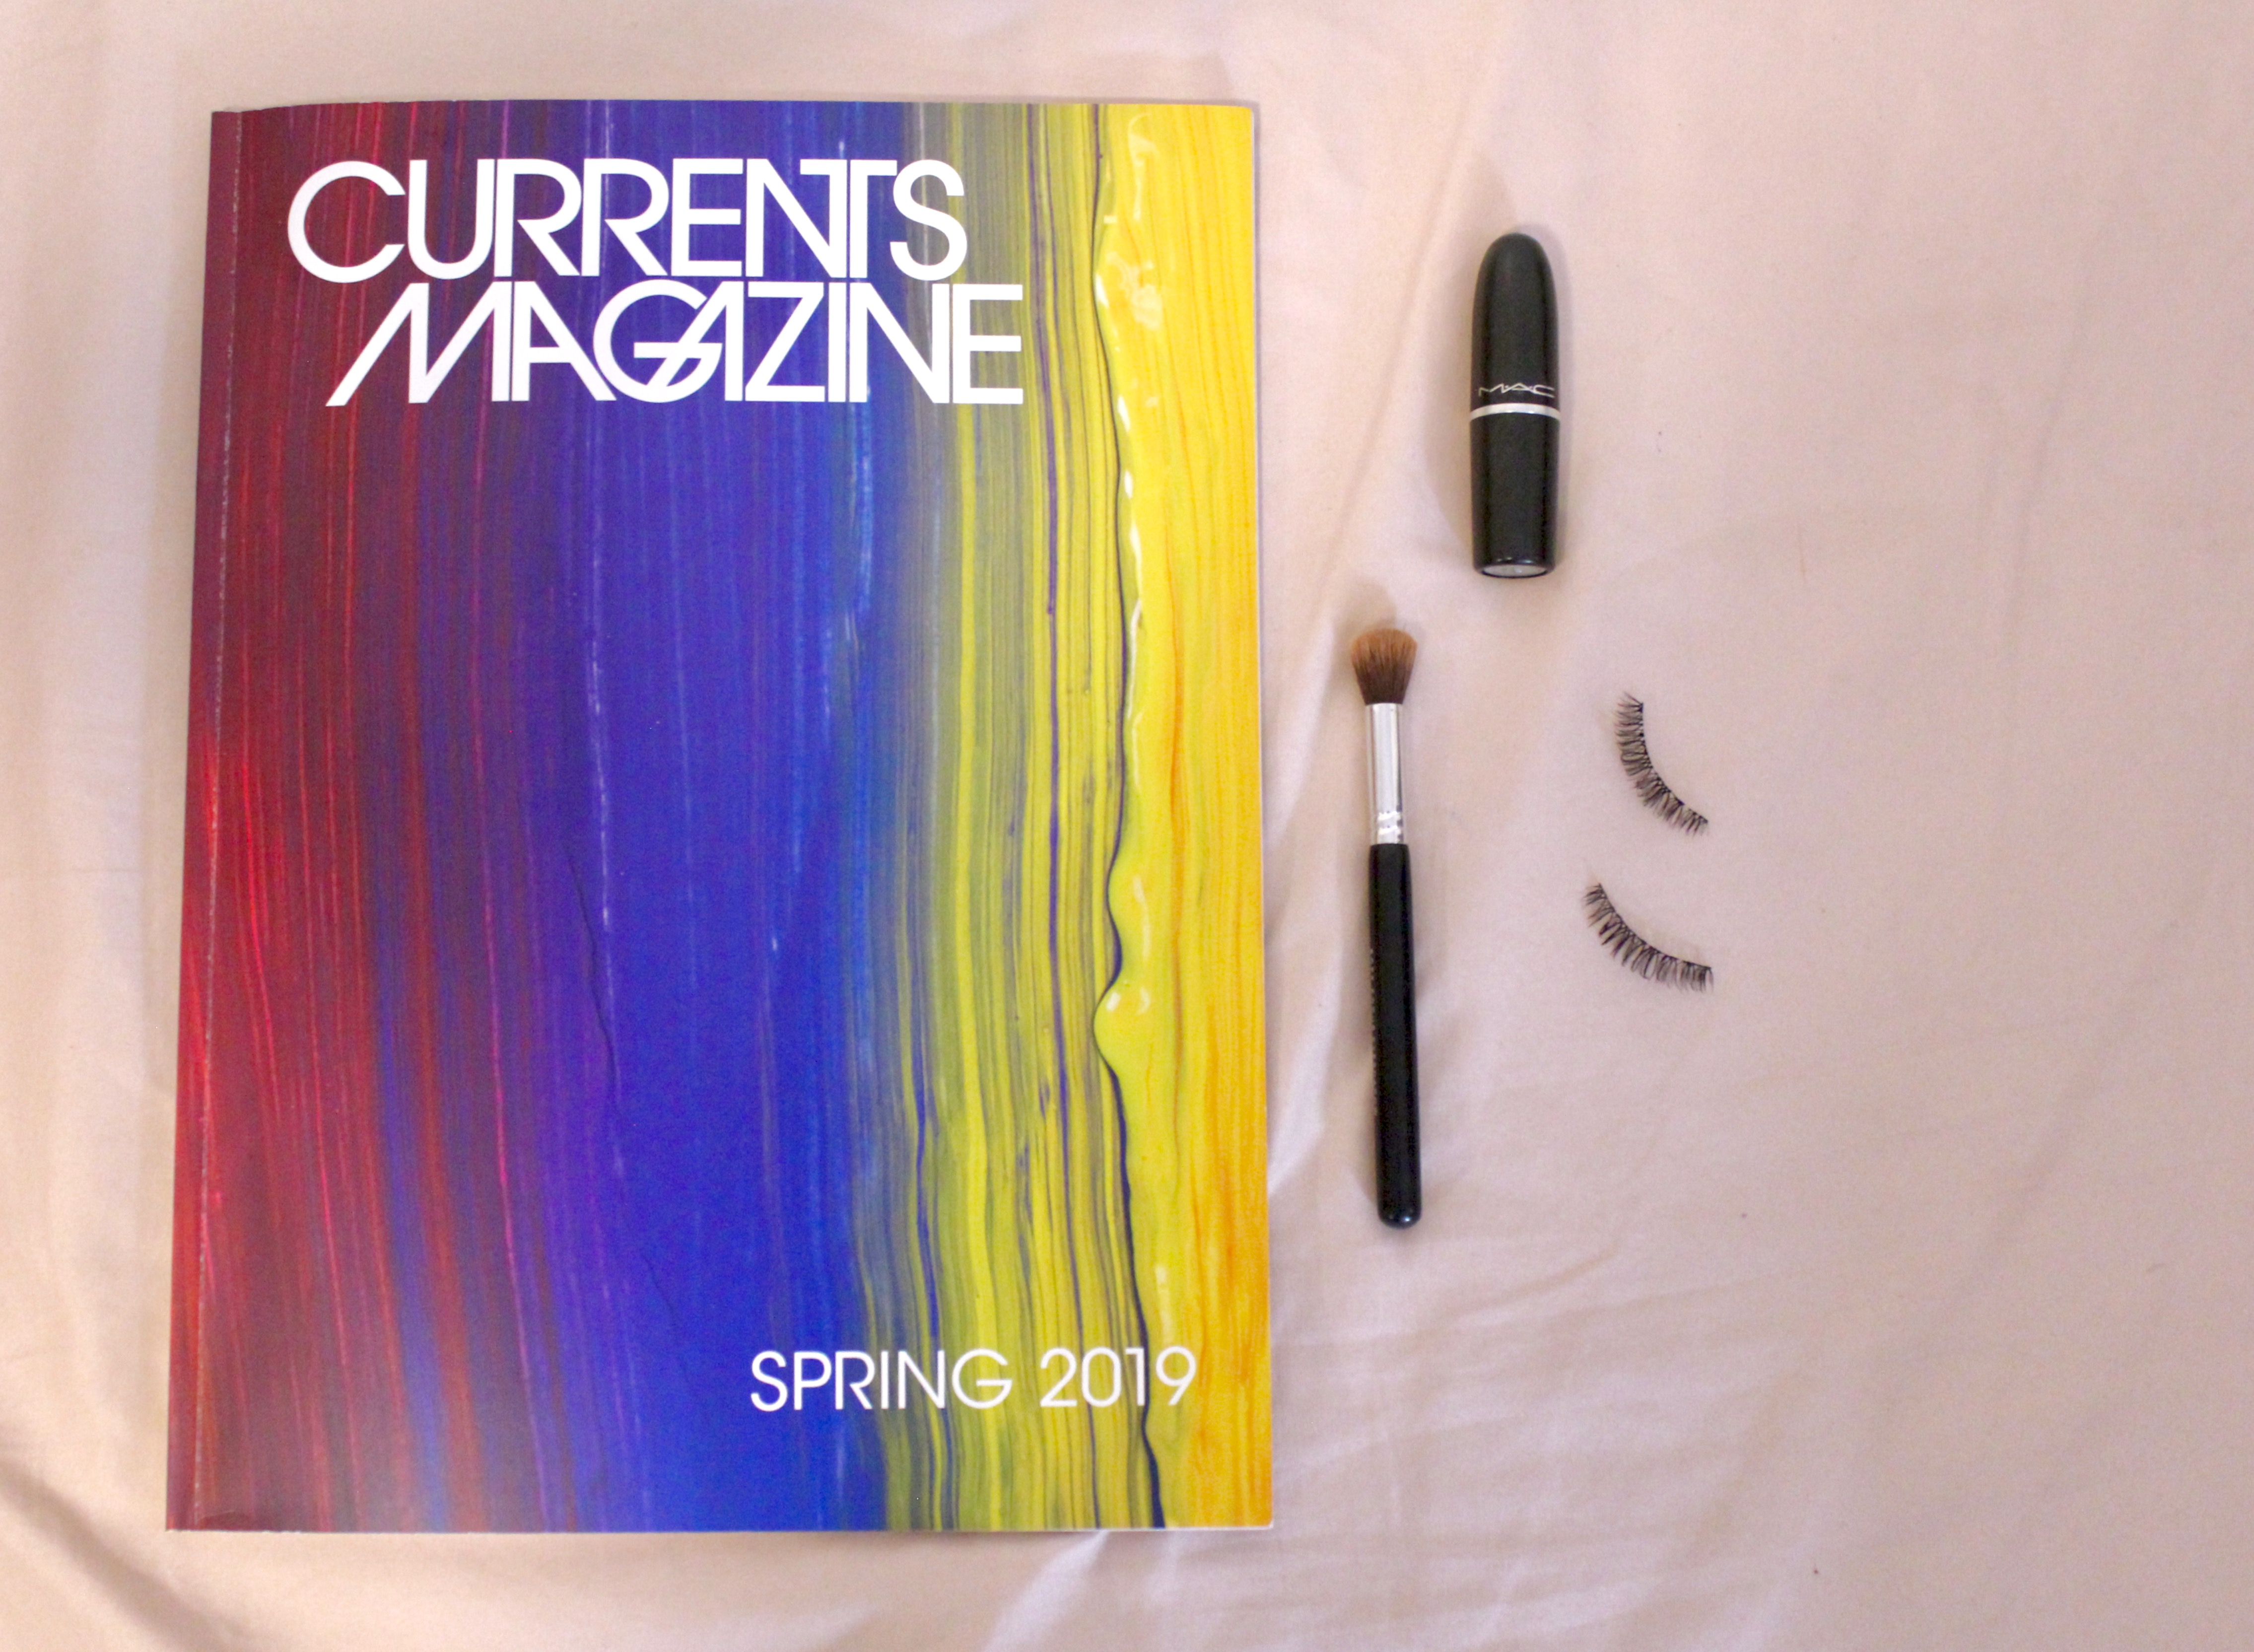 CurrentsMagazineCover